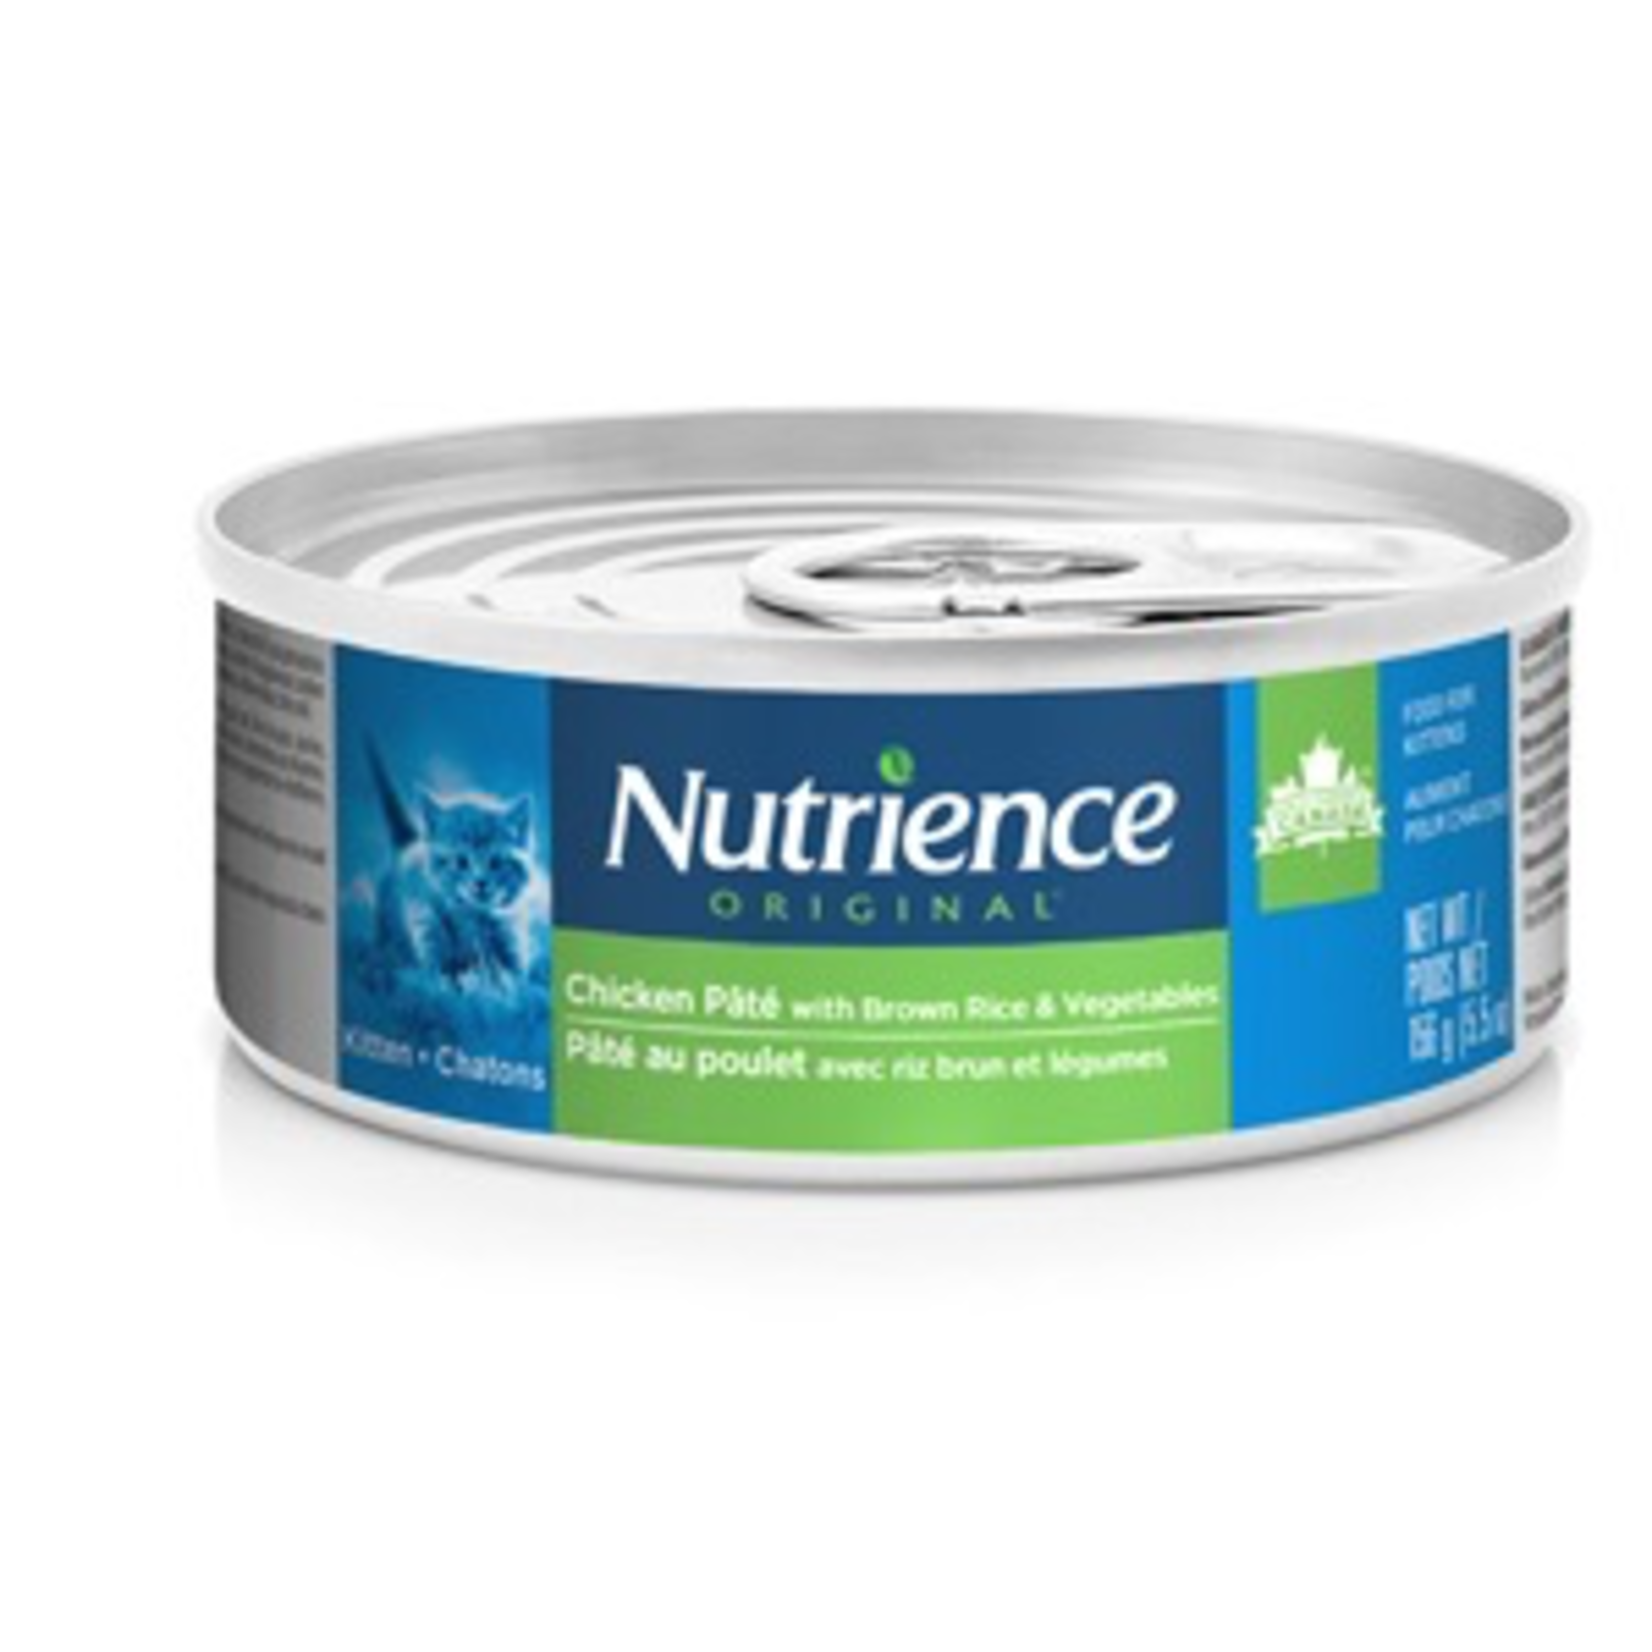 NUTRIENCE Nutrience Original Kitten - Chicken Pâté with Brown Rice & Vegetables - 156 g (5.5 oz)